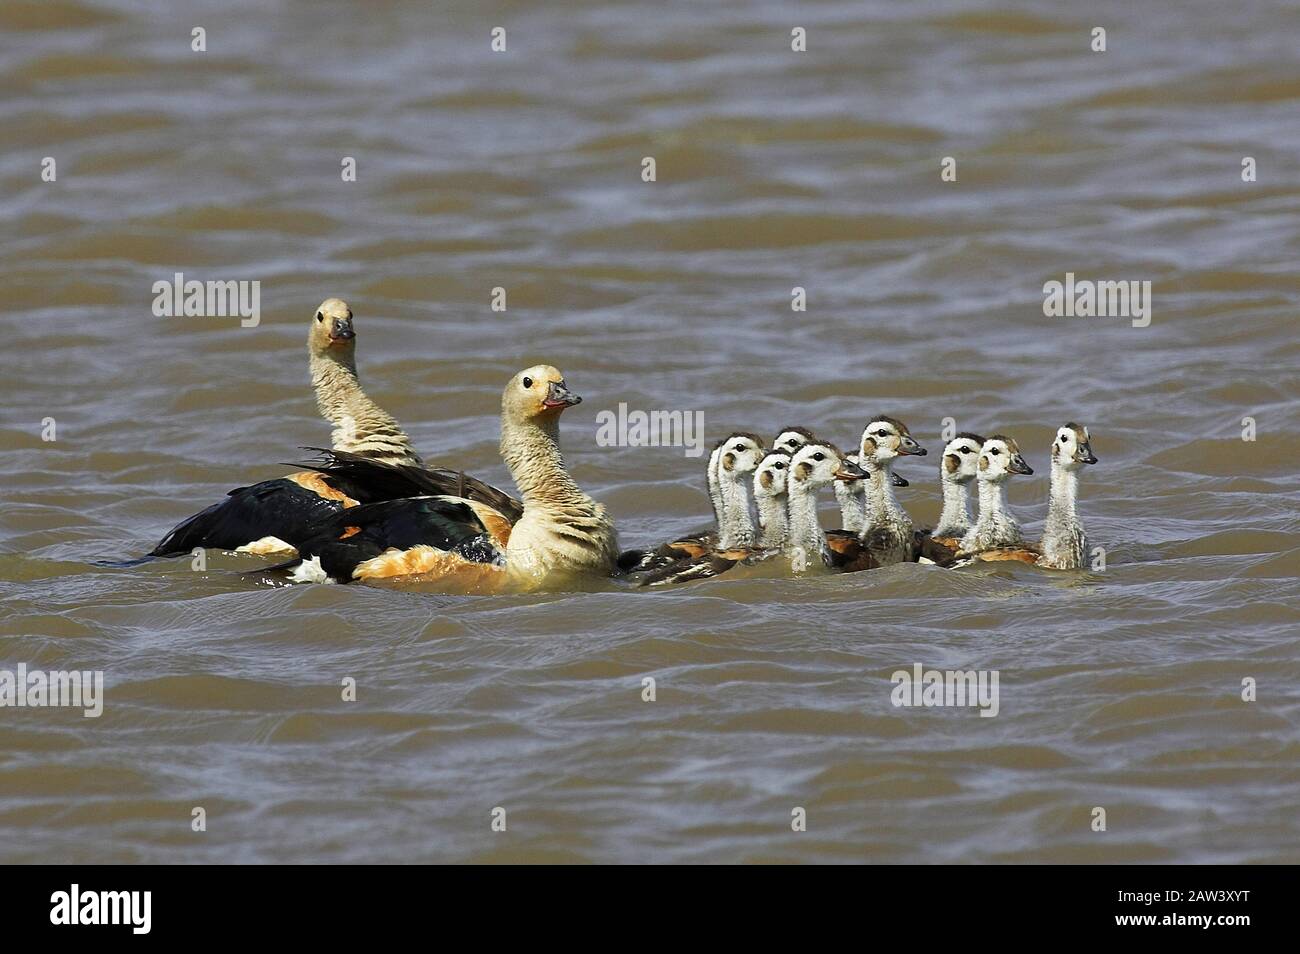 Orinoco Goose, neochen jubata, Pair with Chicks standing in Water, Los Lianos in Venezuela Stock Photo